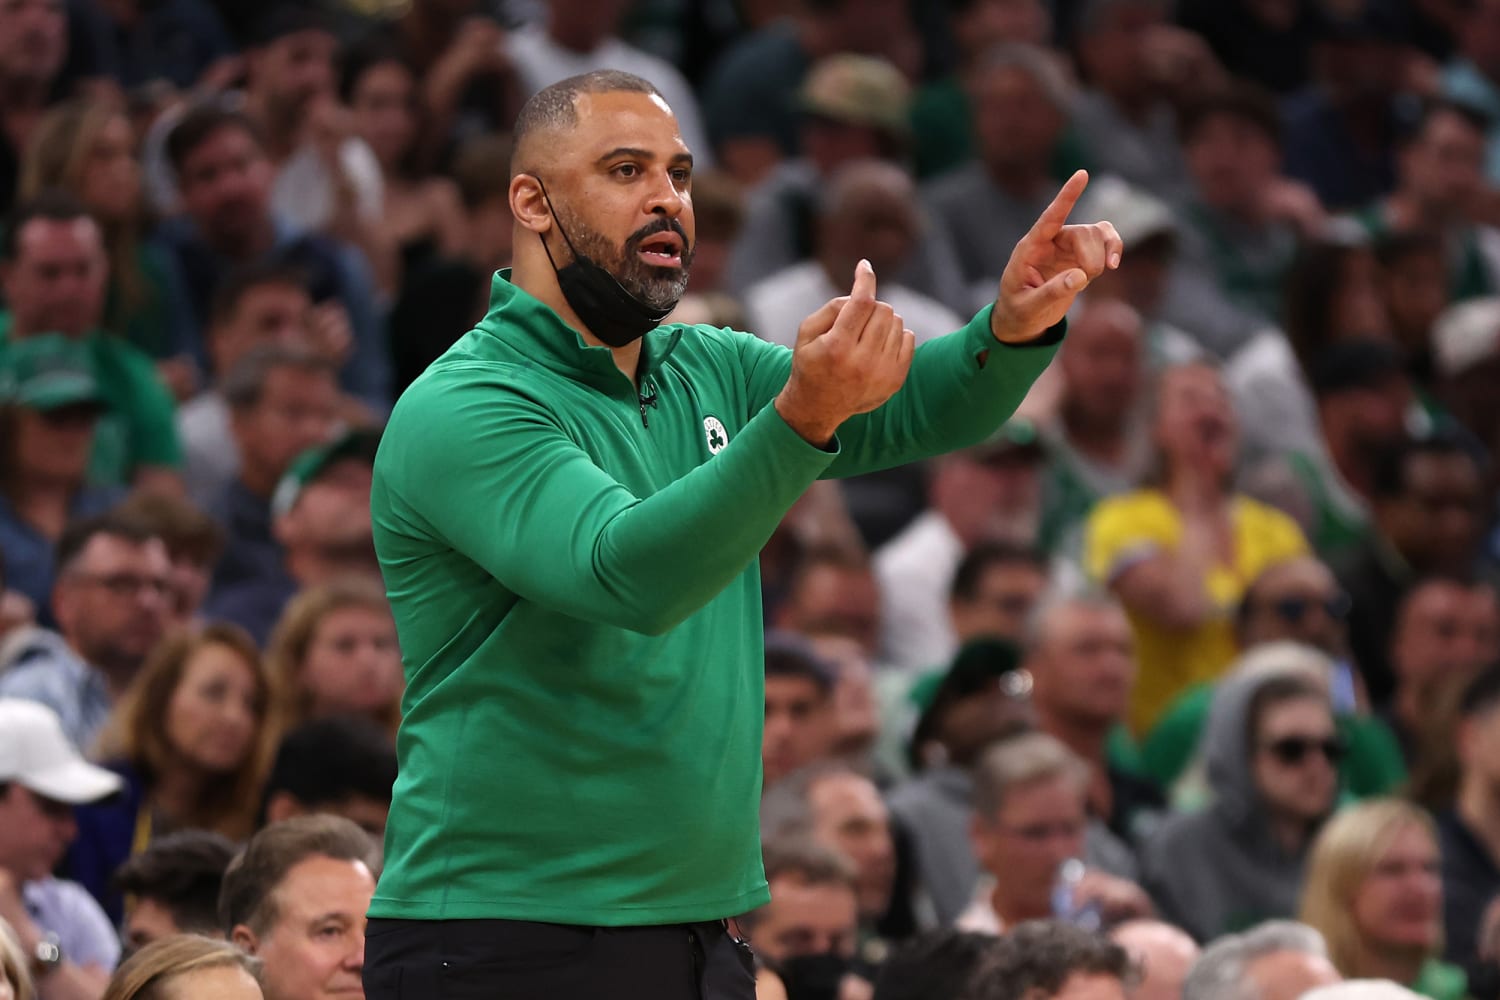 Nia Long Speaks Out After Celtics Coach Ime Udoka's Suspension